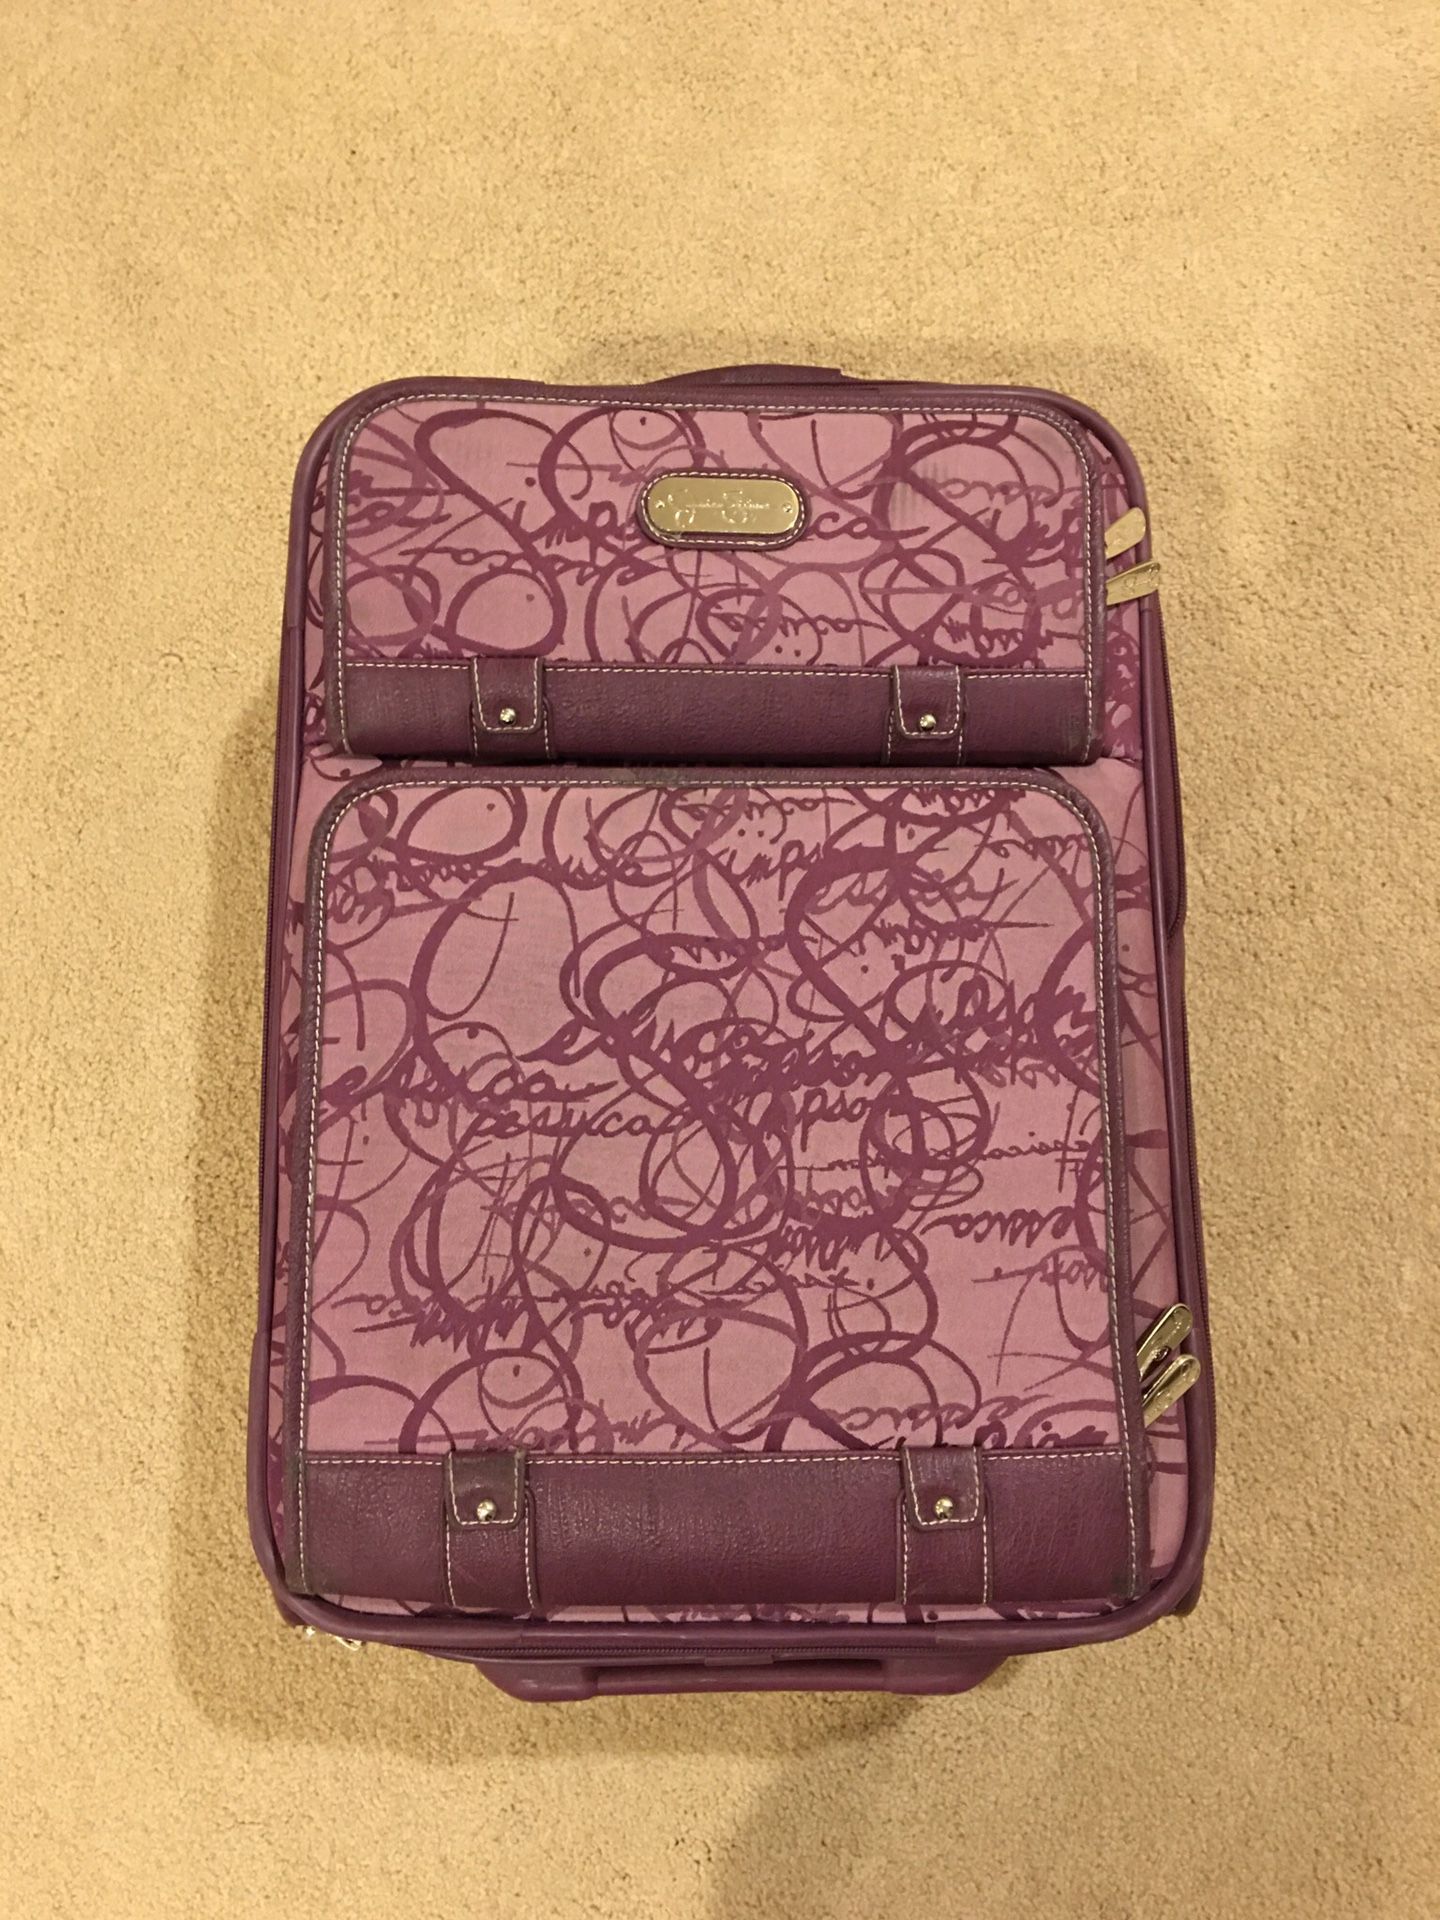 Jessica Simpson carry-on suitcase